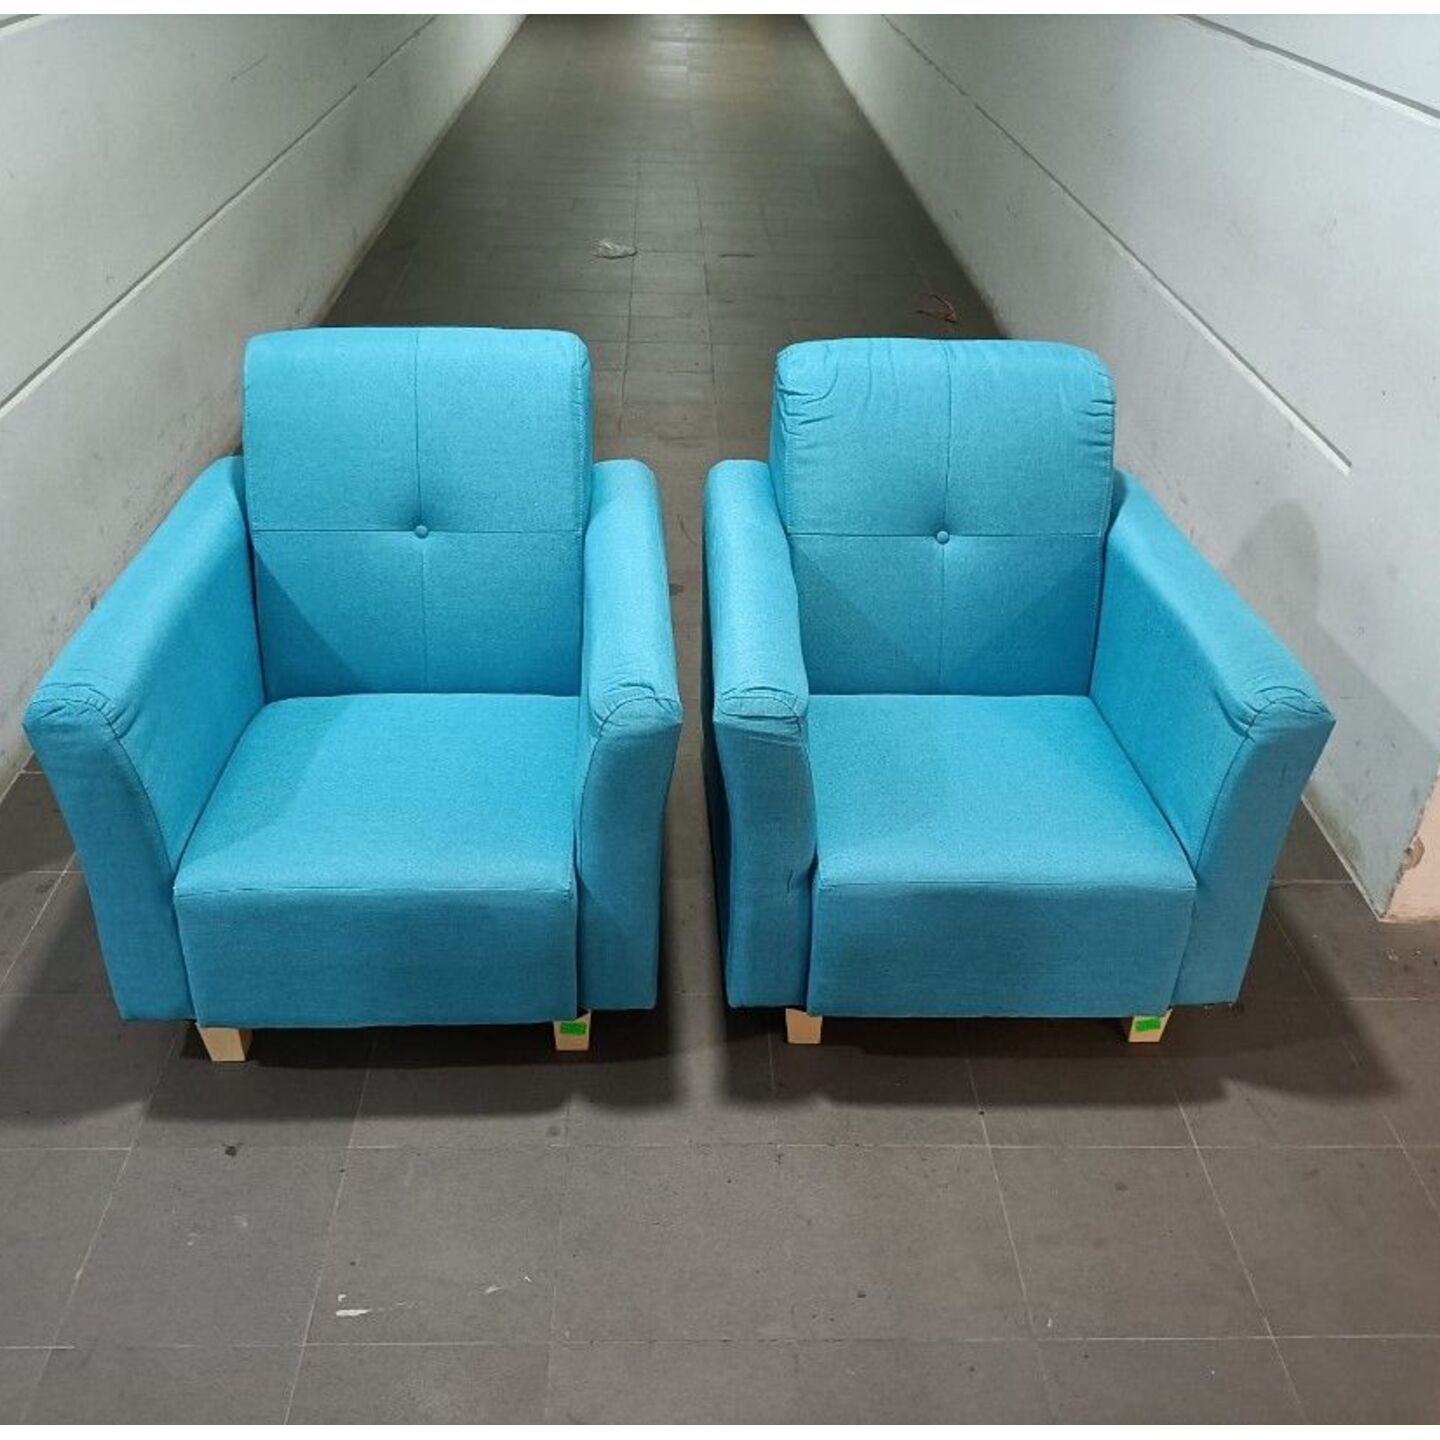 2 x HAVANNA Armchairs in AQUA BLUE FABRIC